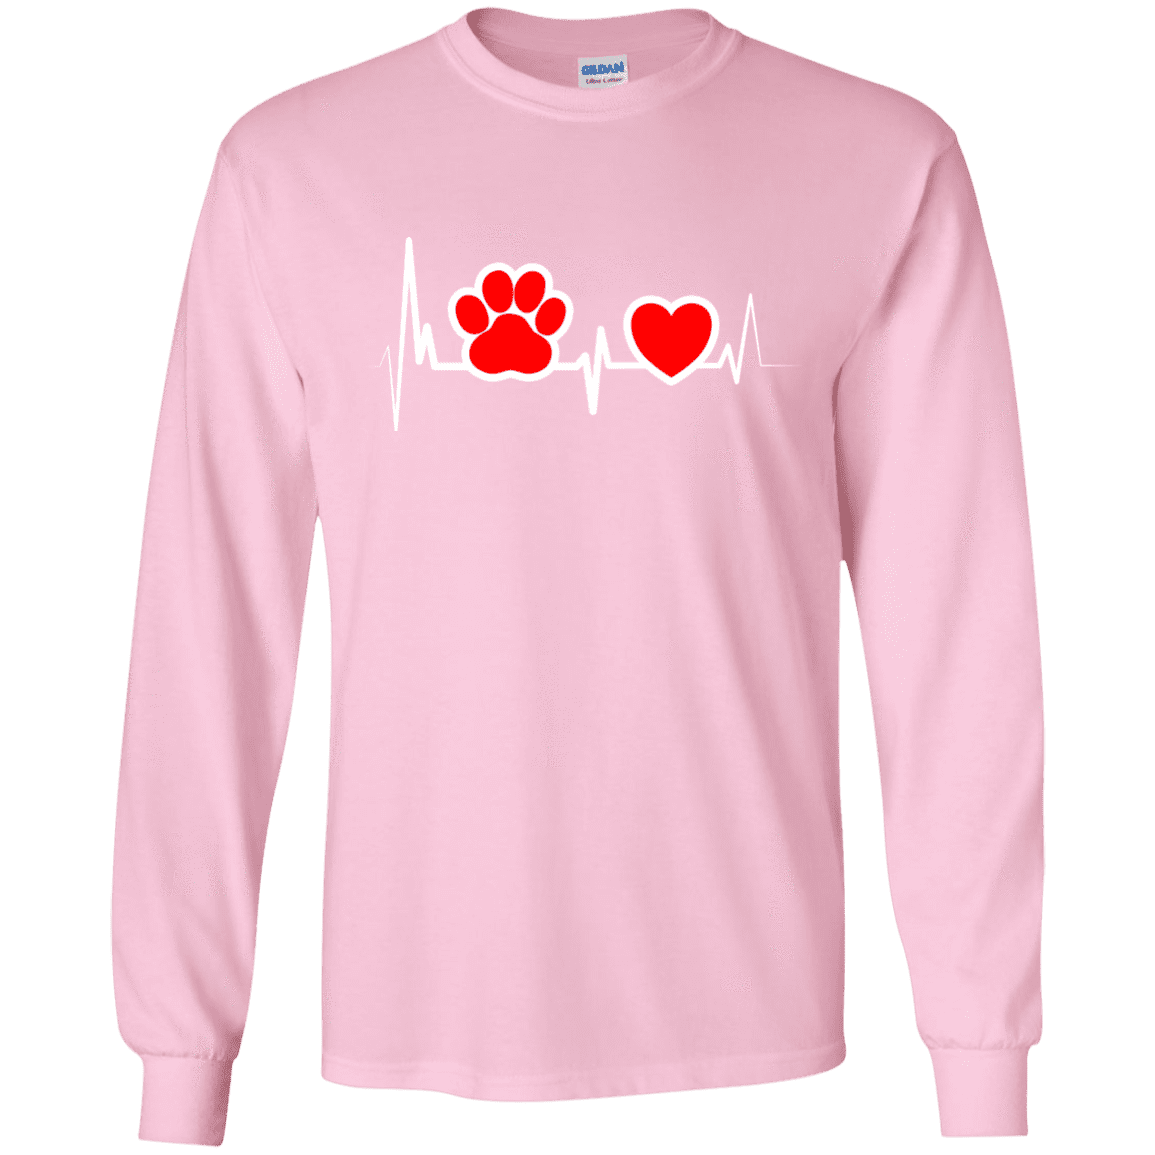 Dog Heartbeat - Long Sleeve T Shirt.